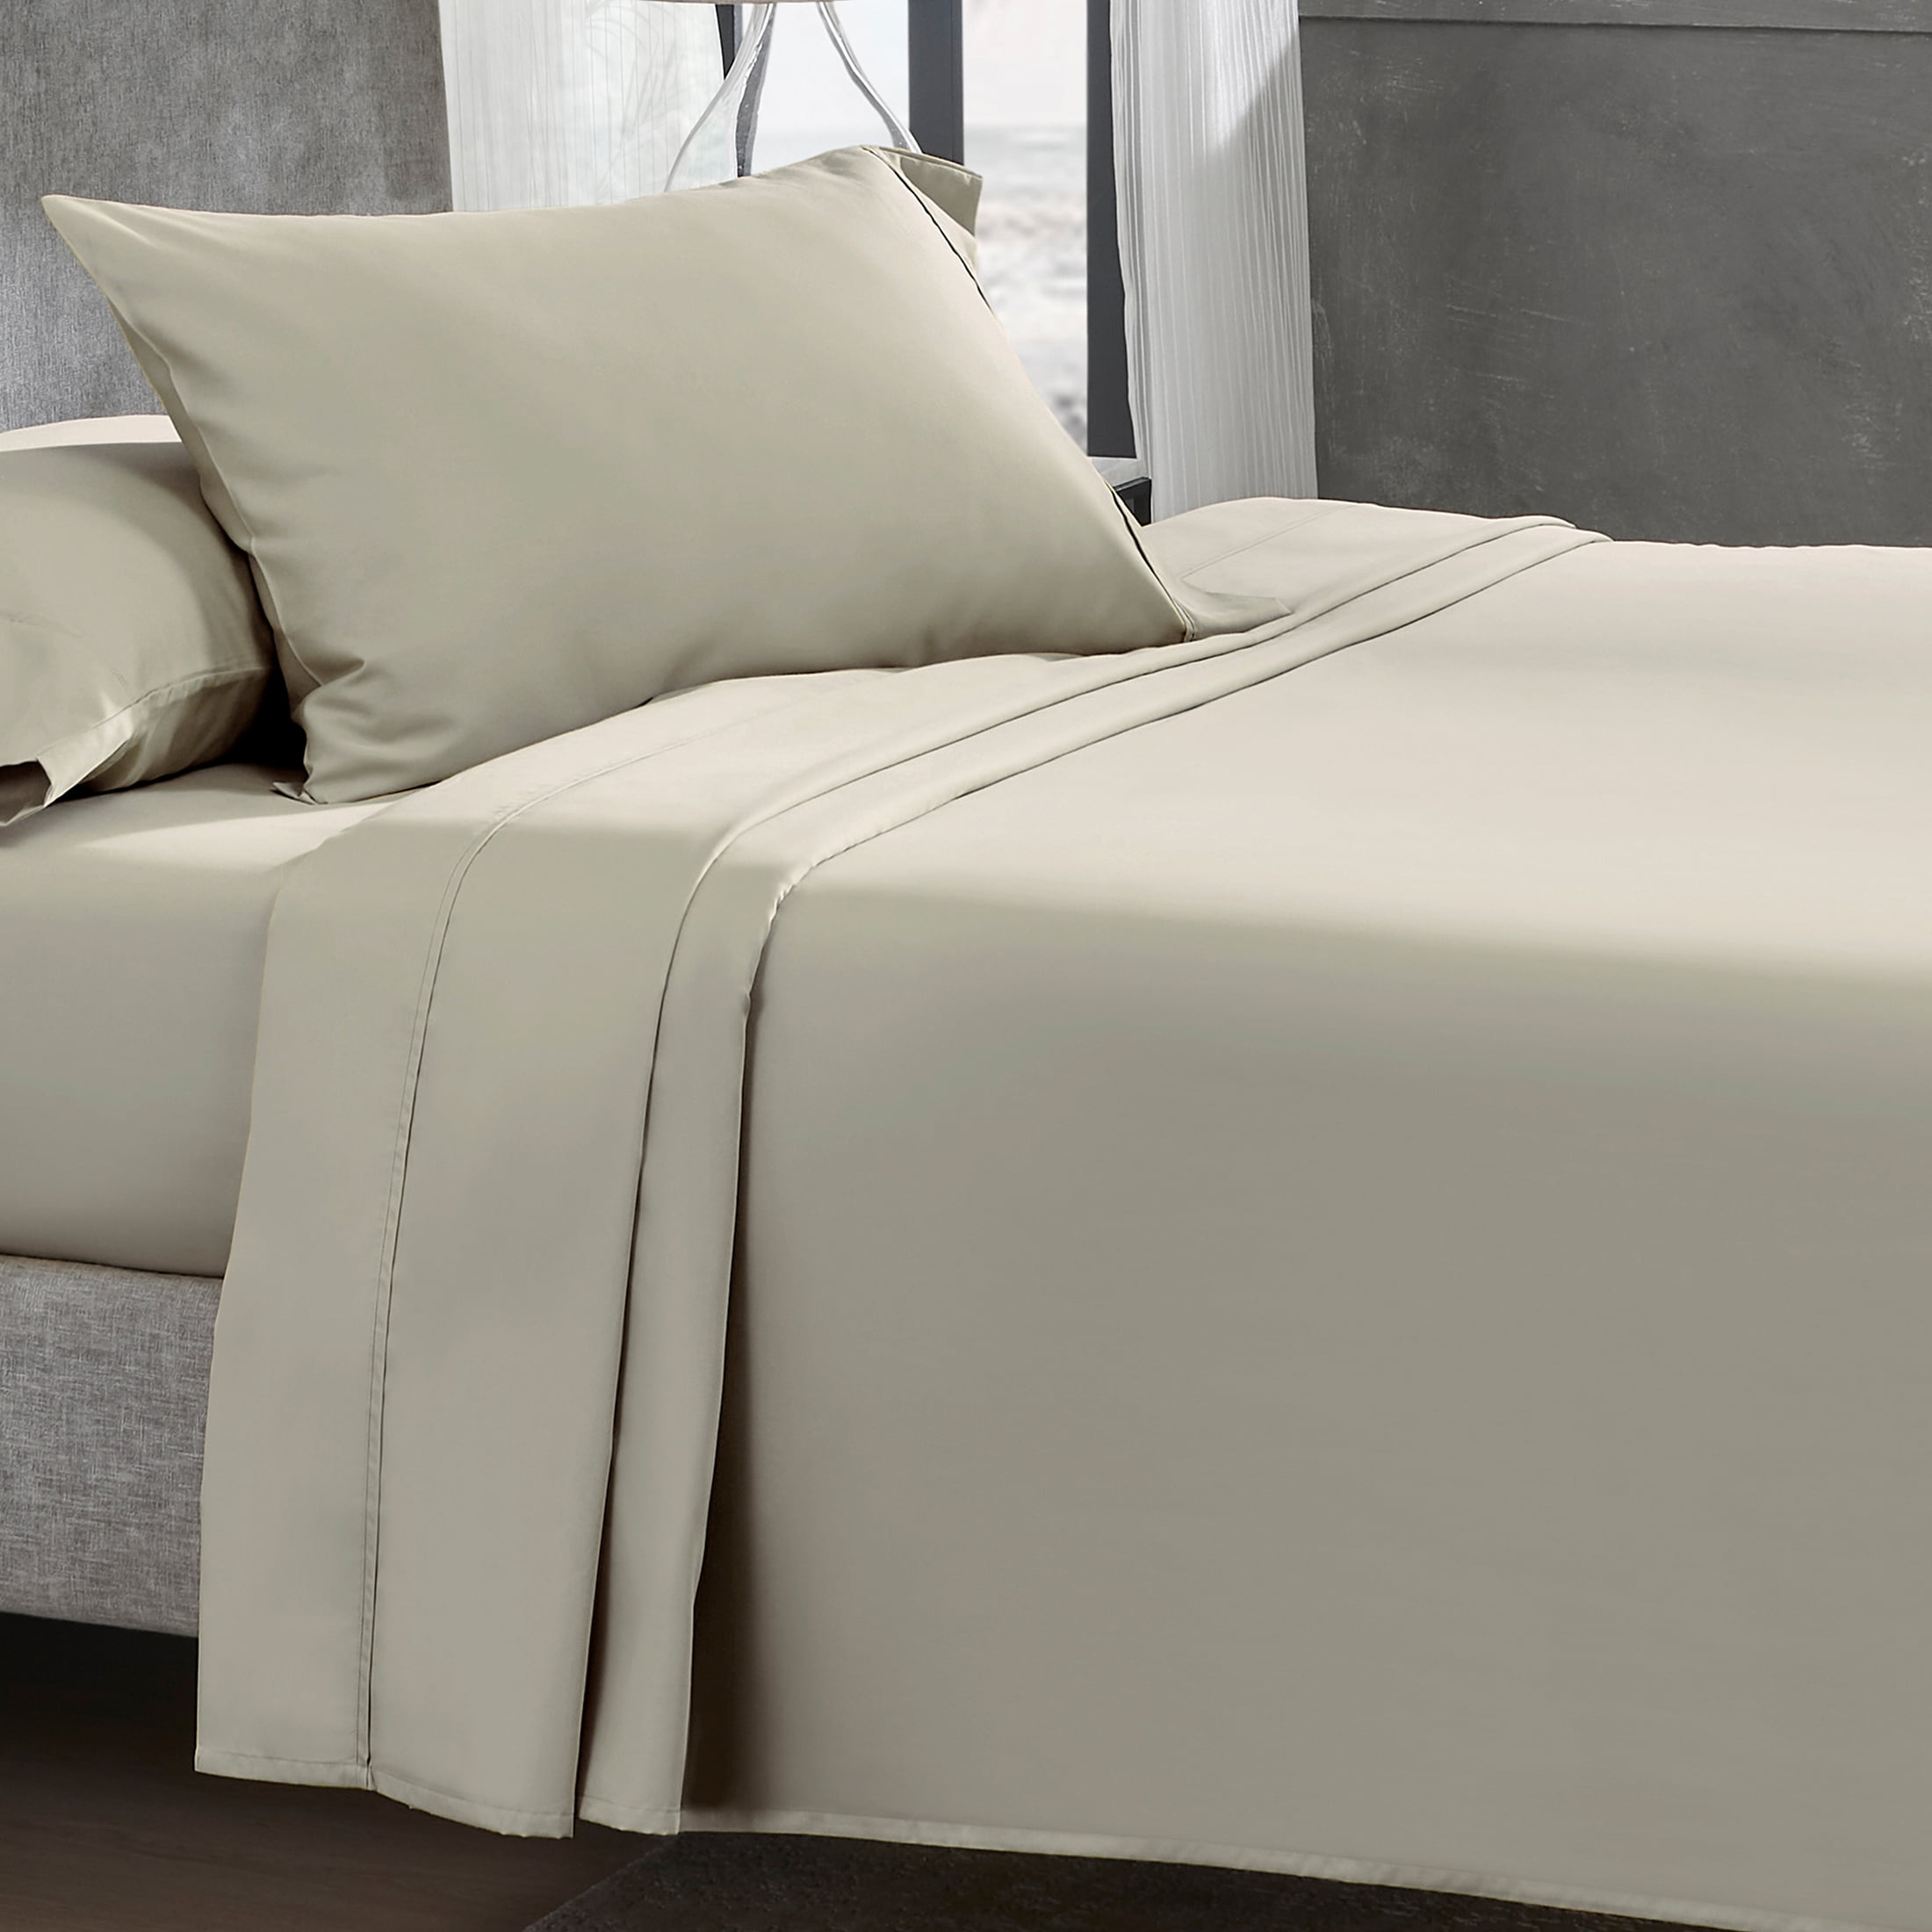 Details about   King Size Bedsheet Cotton Bedspread Jaipuri Bedding Pillow Covers Home Decor 3pc 